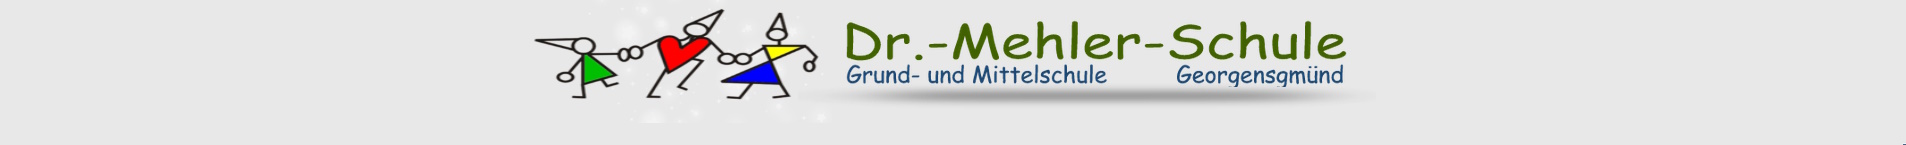 www.dr-mehler-schule.de